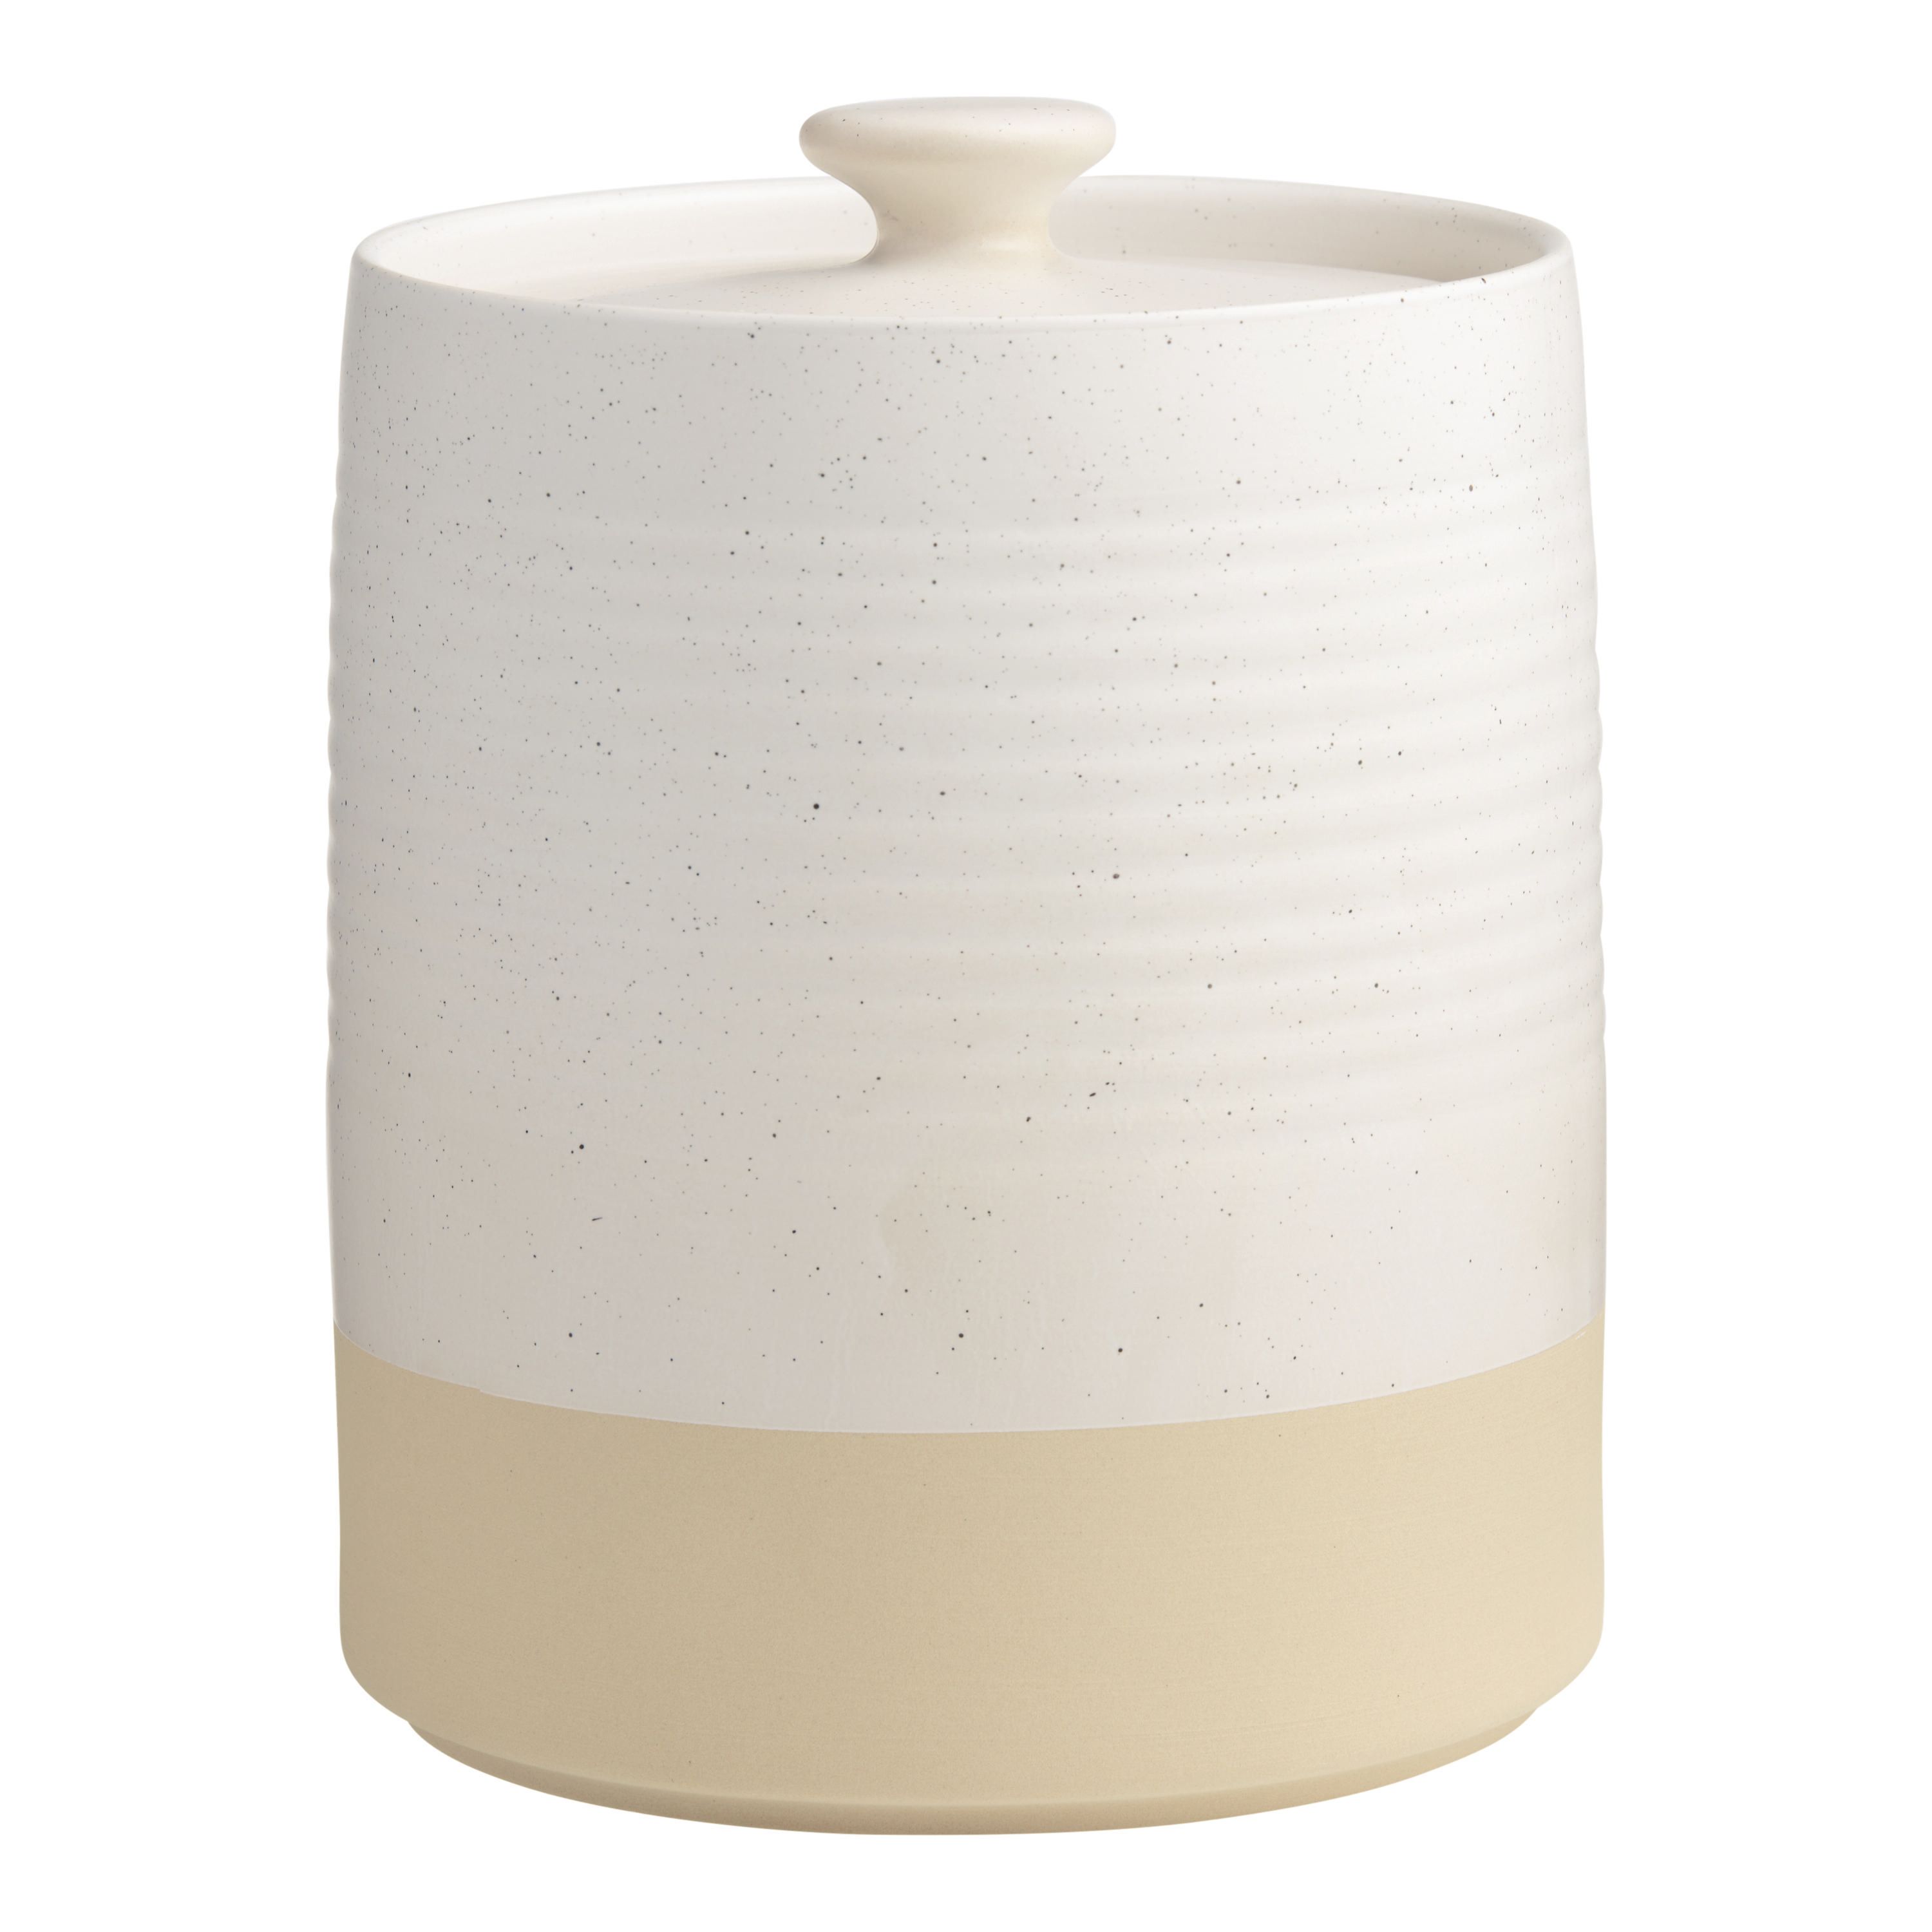 Tipton Large Ivory Speckled Ceramic Storage Canister | World Market